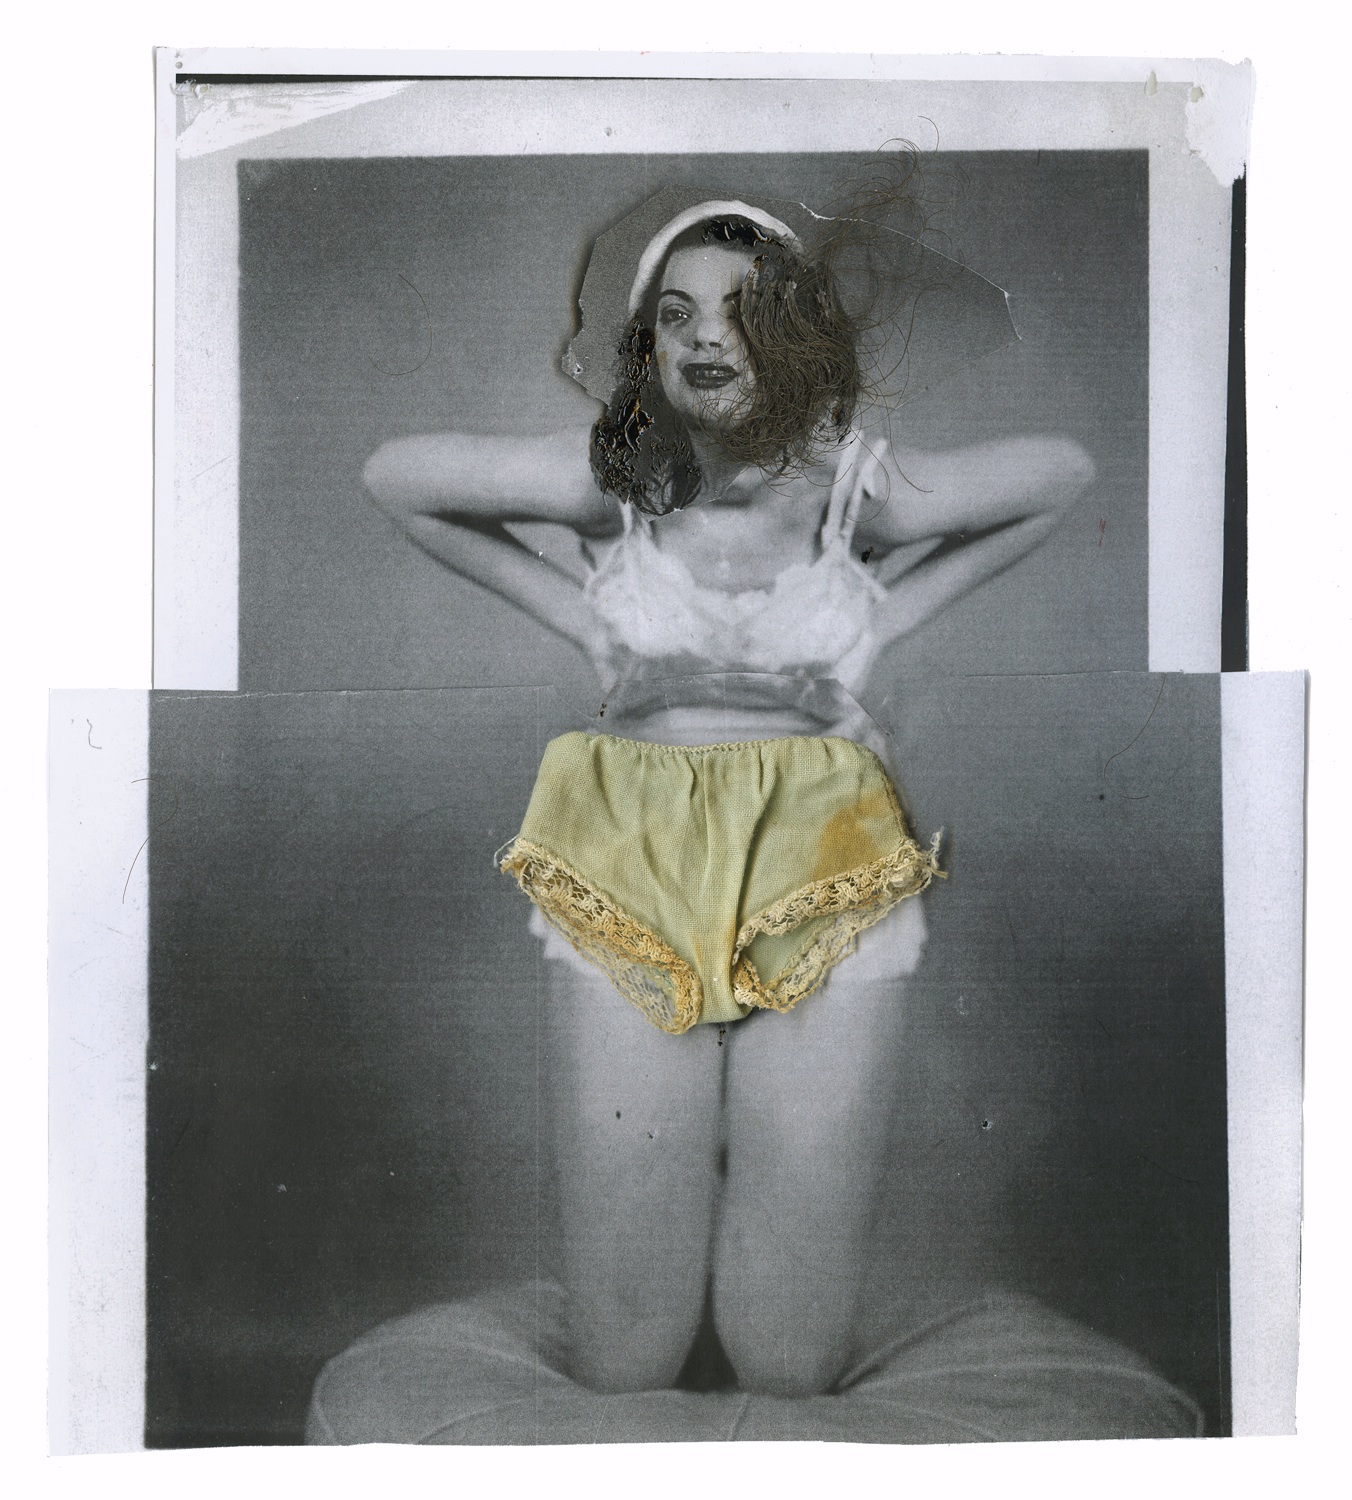 Angela Grossmann, Underwear, 2015, Mixed Media on Paper, 21 x 15 inches